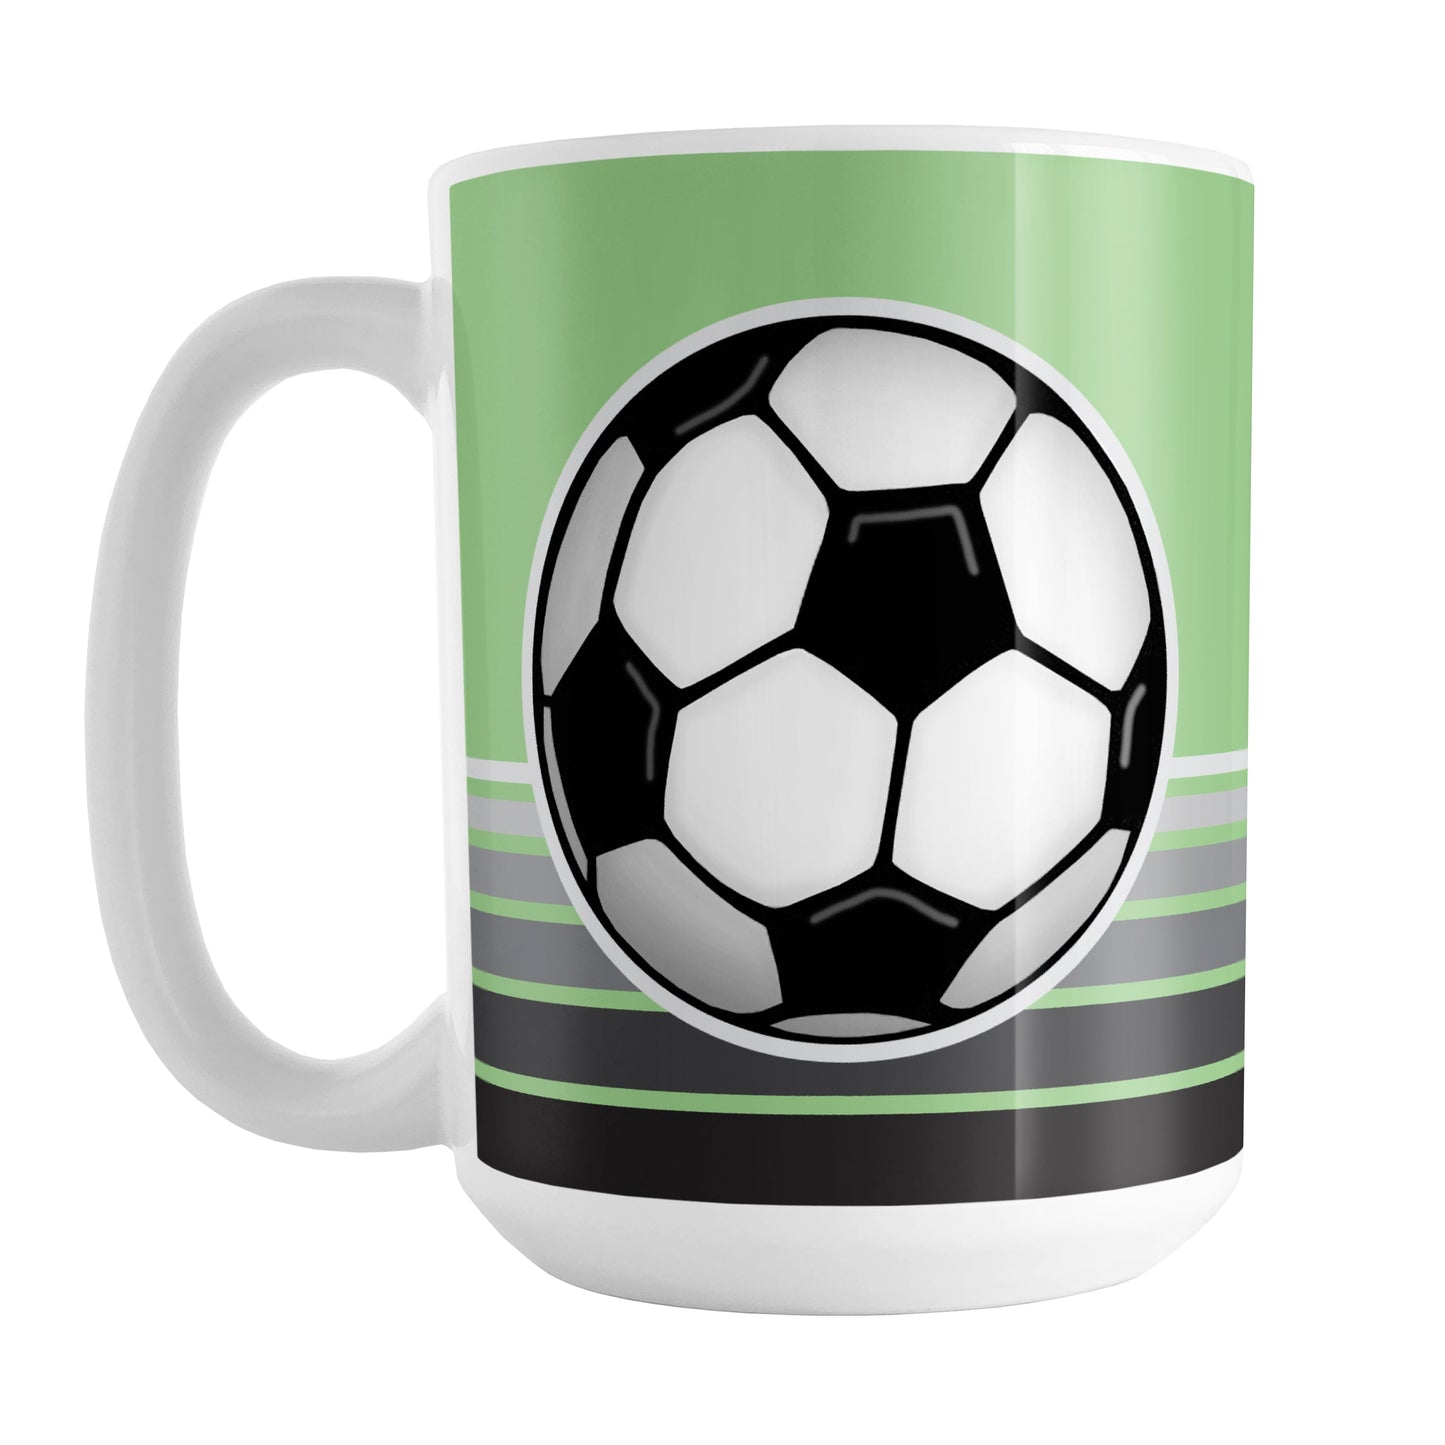 Gray Gradient Lined Green Soccer Ball Mug (15oz) at Amy's Coffee Mugs